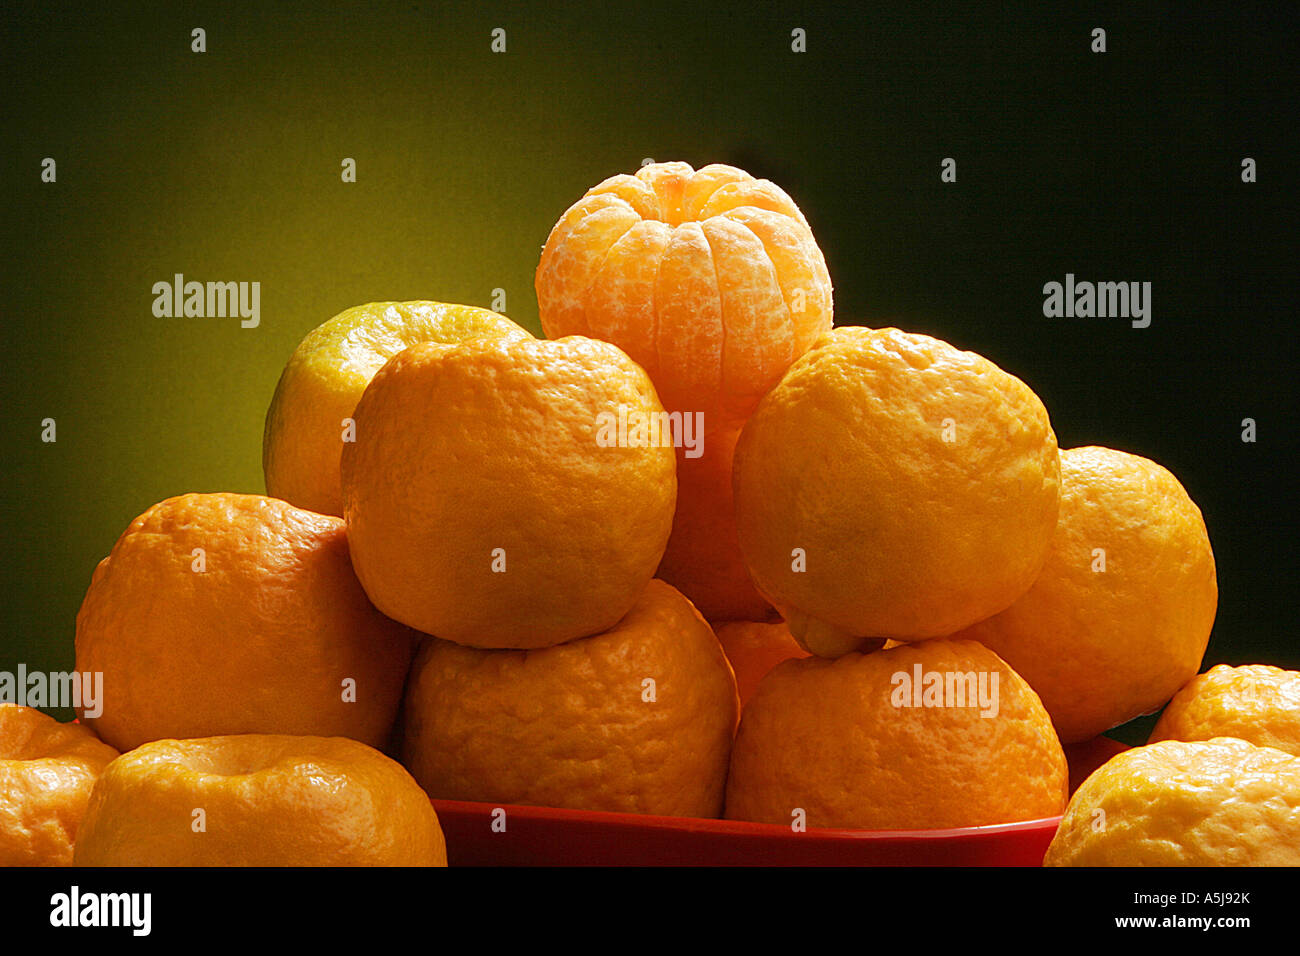 Fruit oranges in bowl on yellow black background Stock Photo